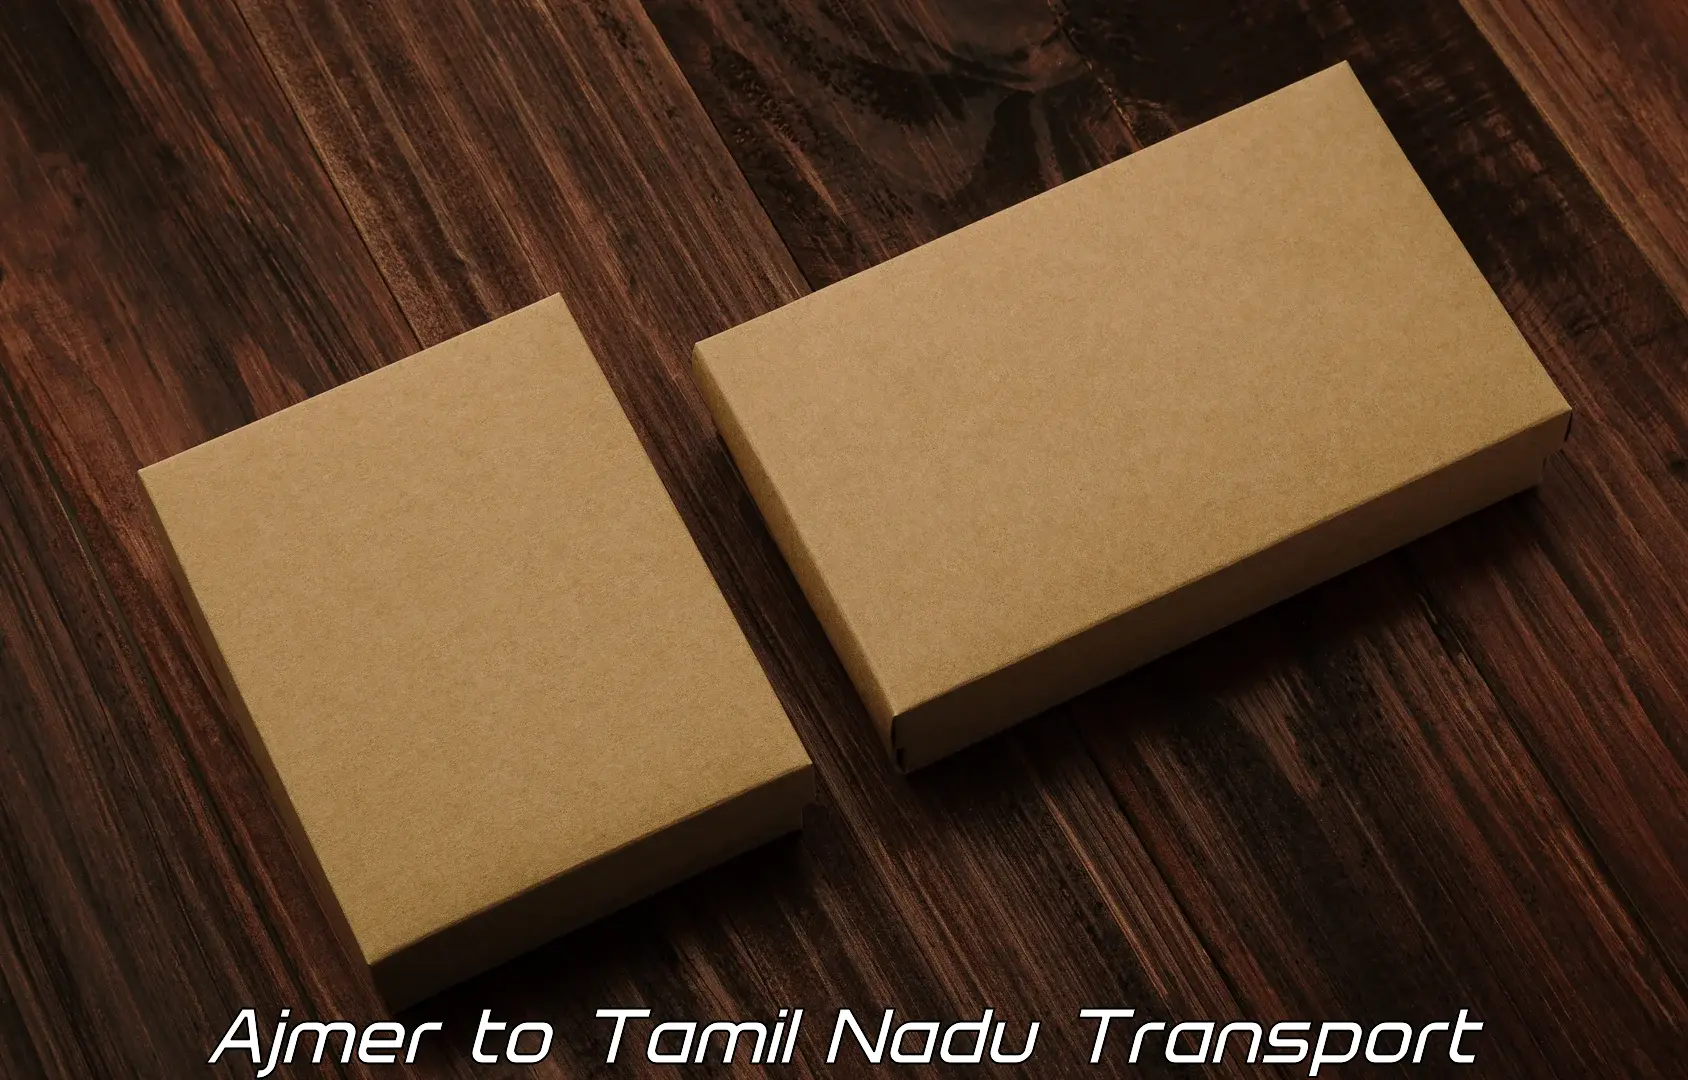 Delivery service Ajmer to Ramanathapuram